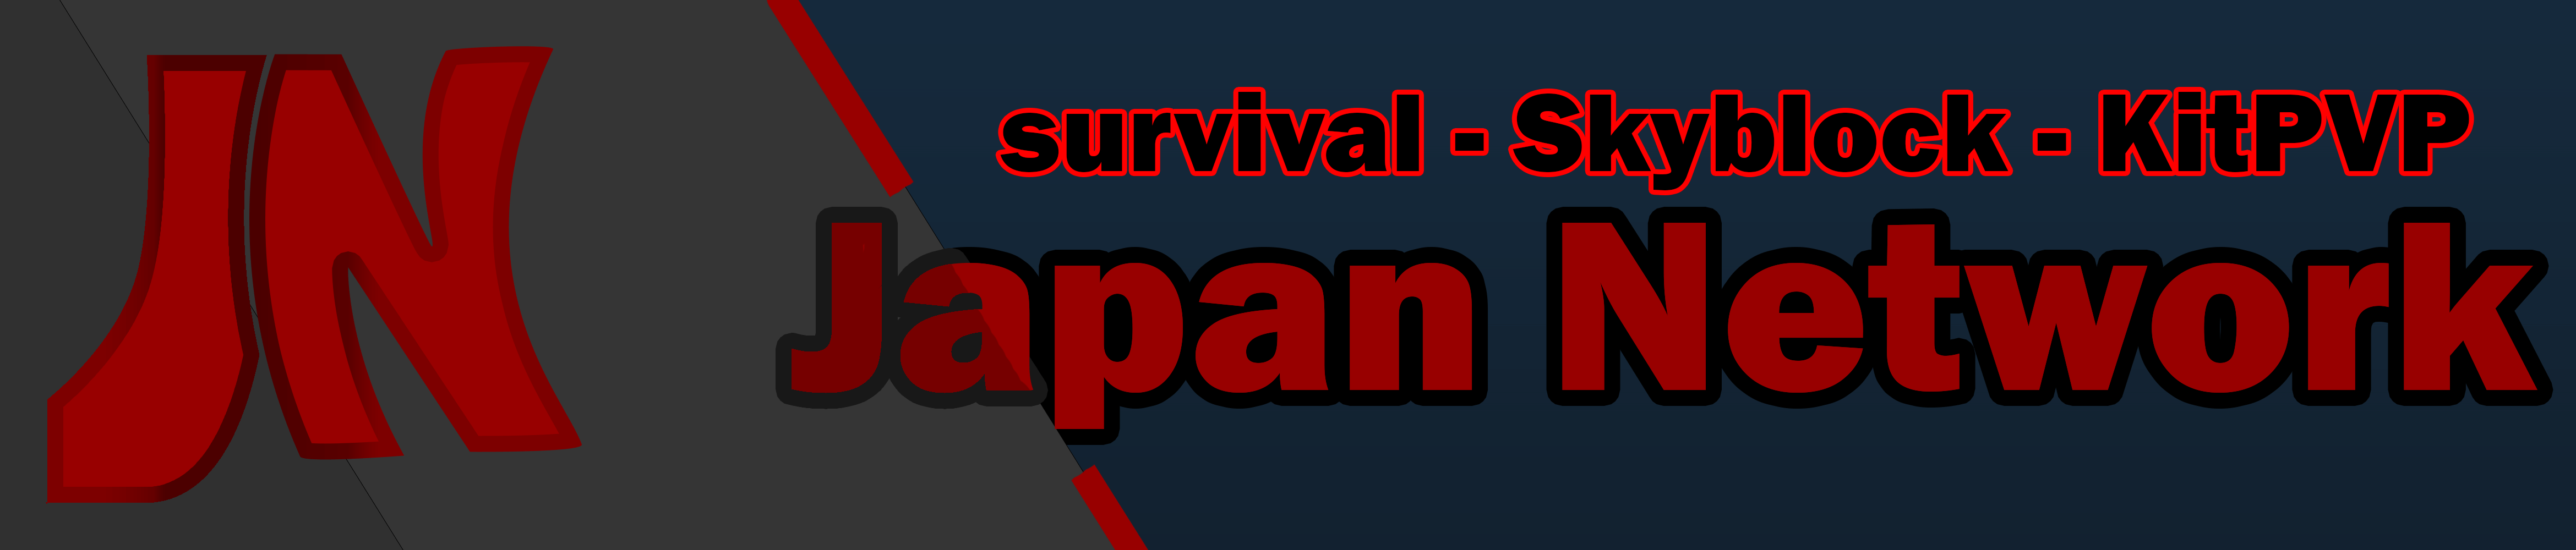 Banner for Japan Network server